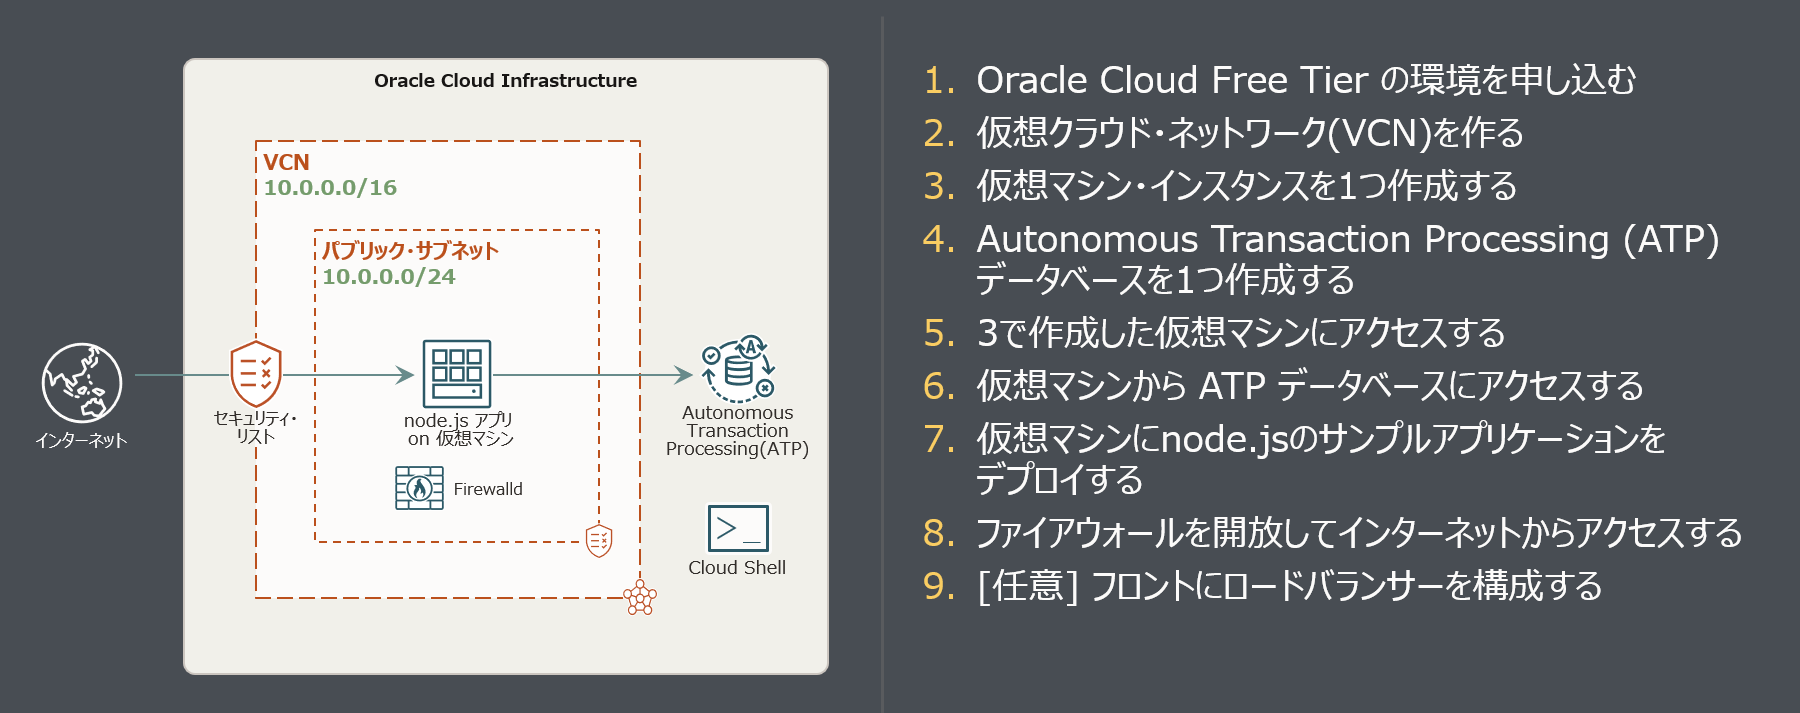 Always Freeで快適dbアプリ開発環境を構築する Oracle Cloud Infrastructure チュートリアル